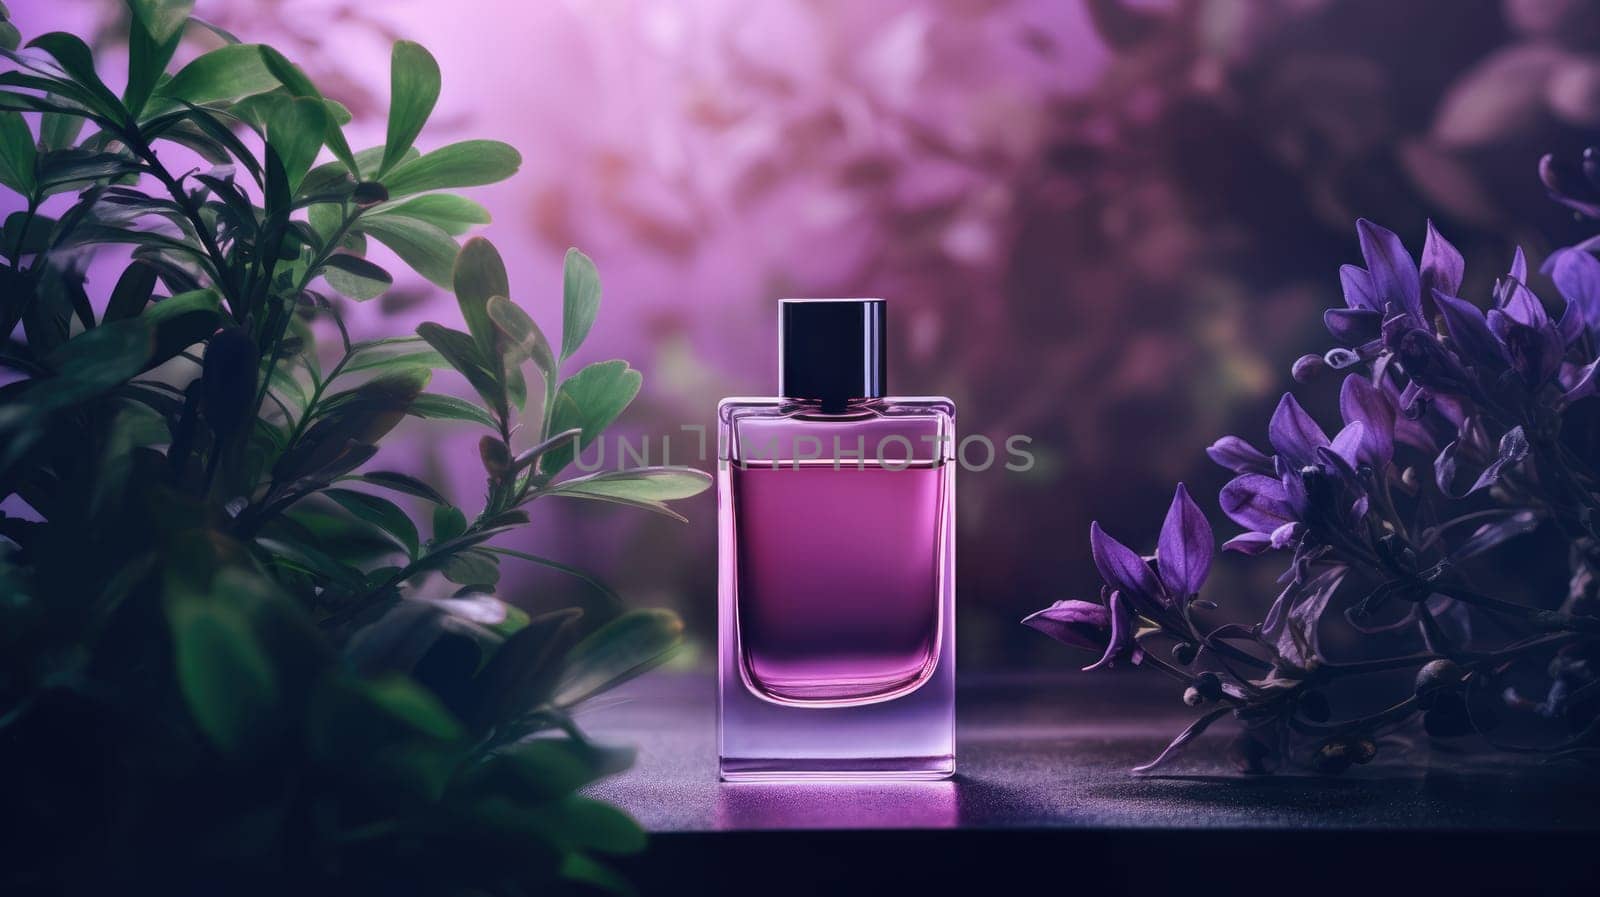 Transparent purple glass perfume bottle mockup with plants on background. Eau de toilette. Mockup, spring flat lay